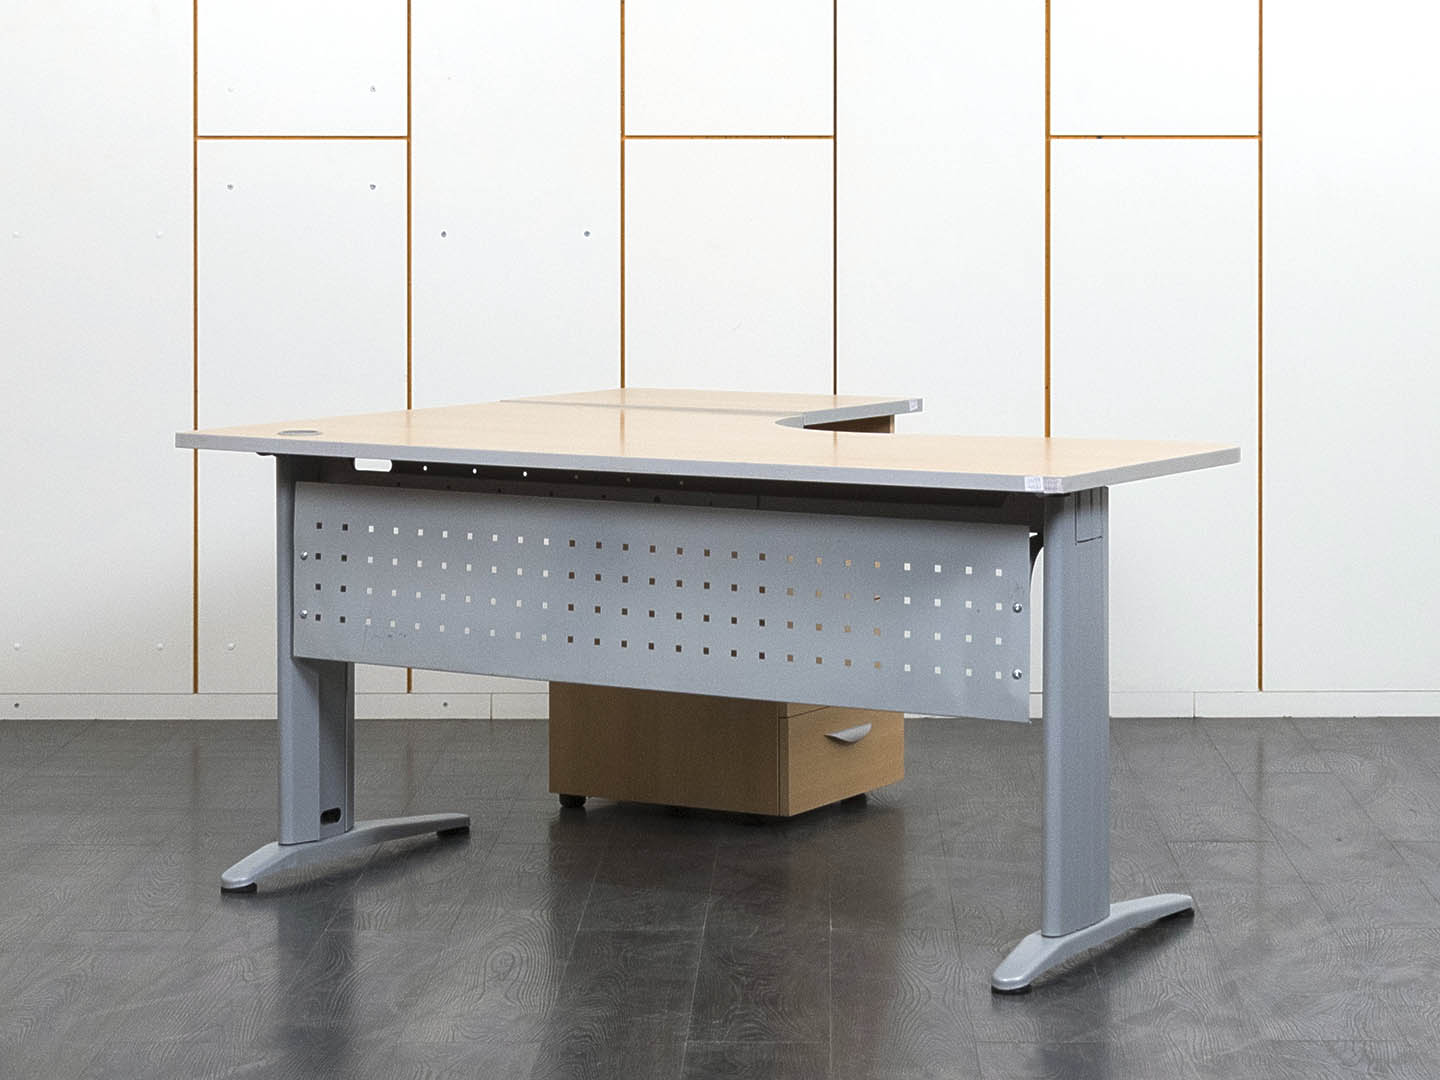 Комплект офисной мебели стол с тумбой  1 600х900х740 ЛДСП Ольха   (СПУЛКП-06041)